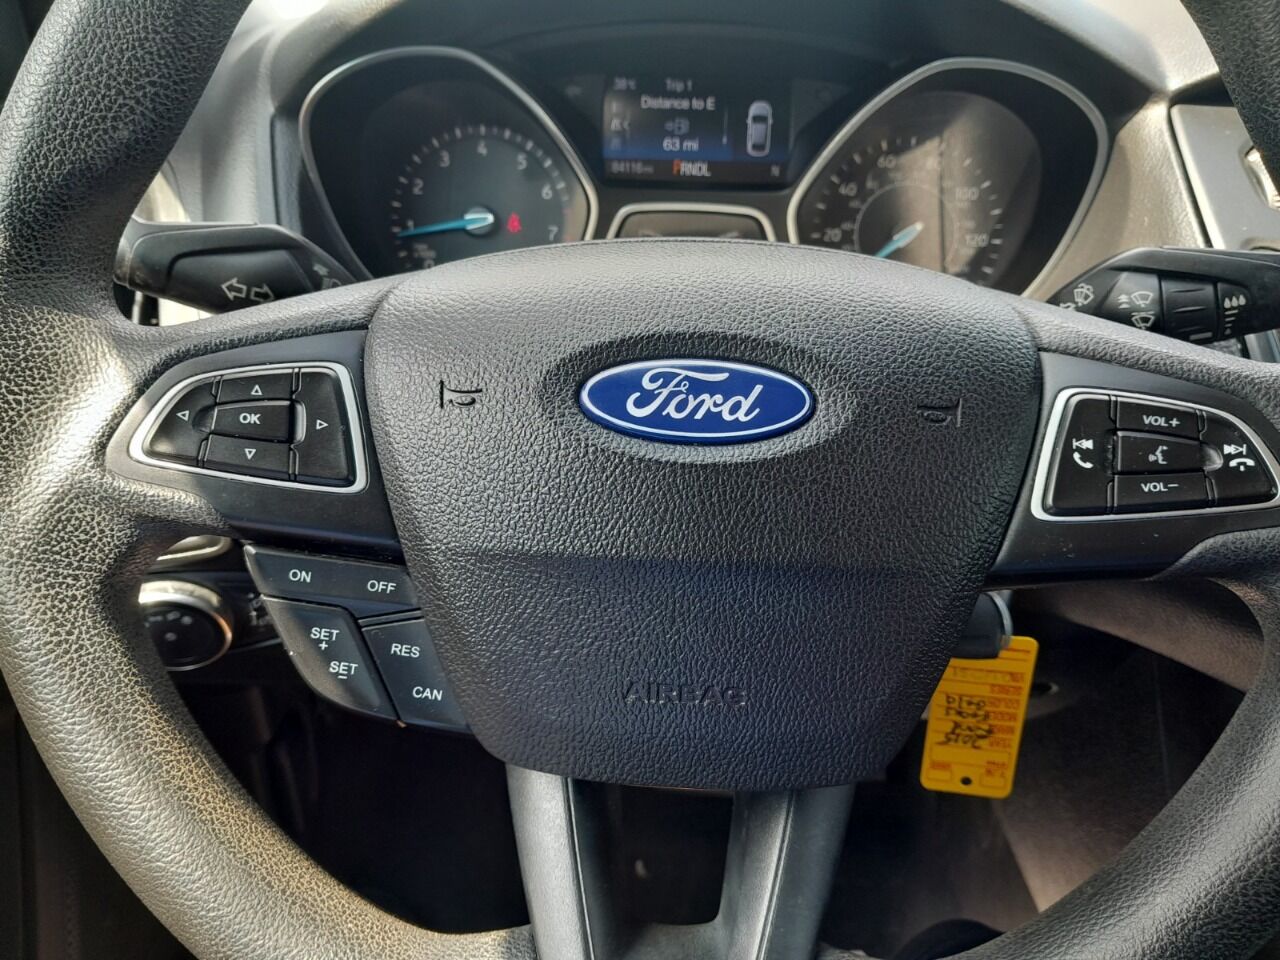 2015 Ford Focus Sedan - $4,950